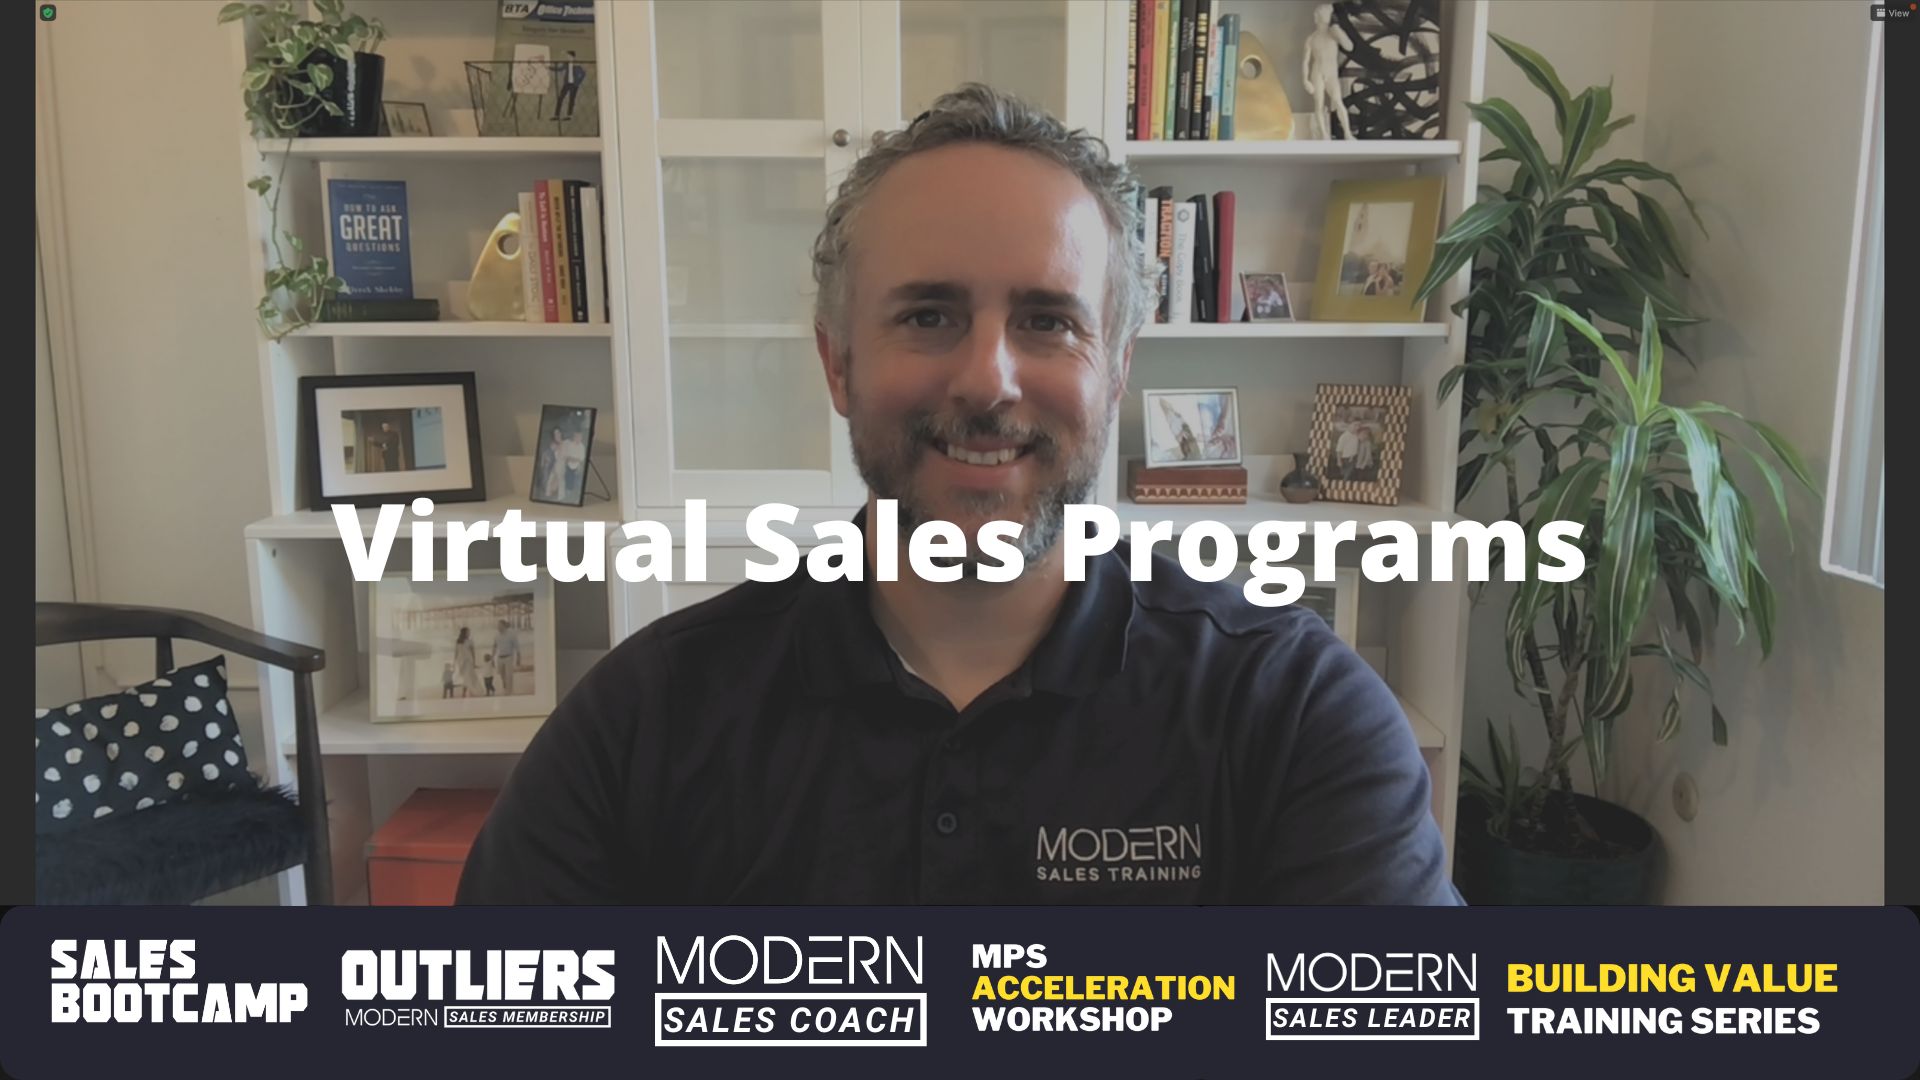 Virtual Sales Programs from Modern Sales Training